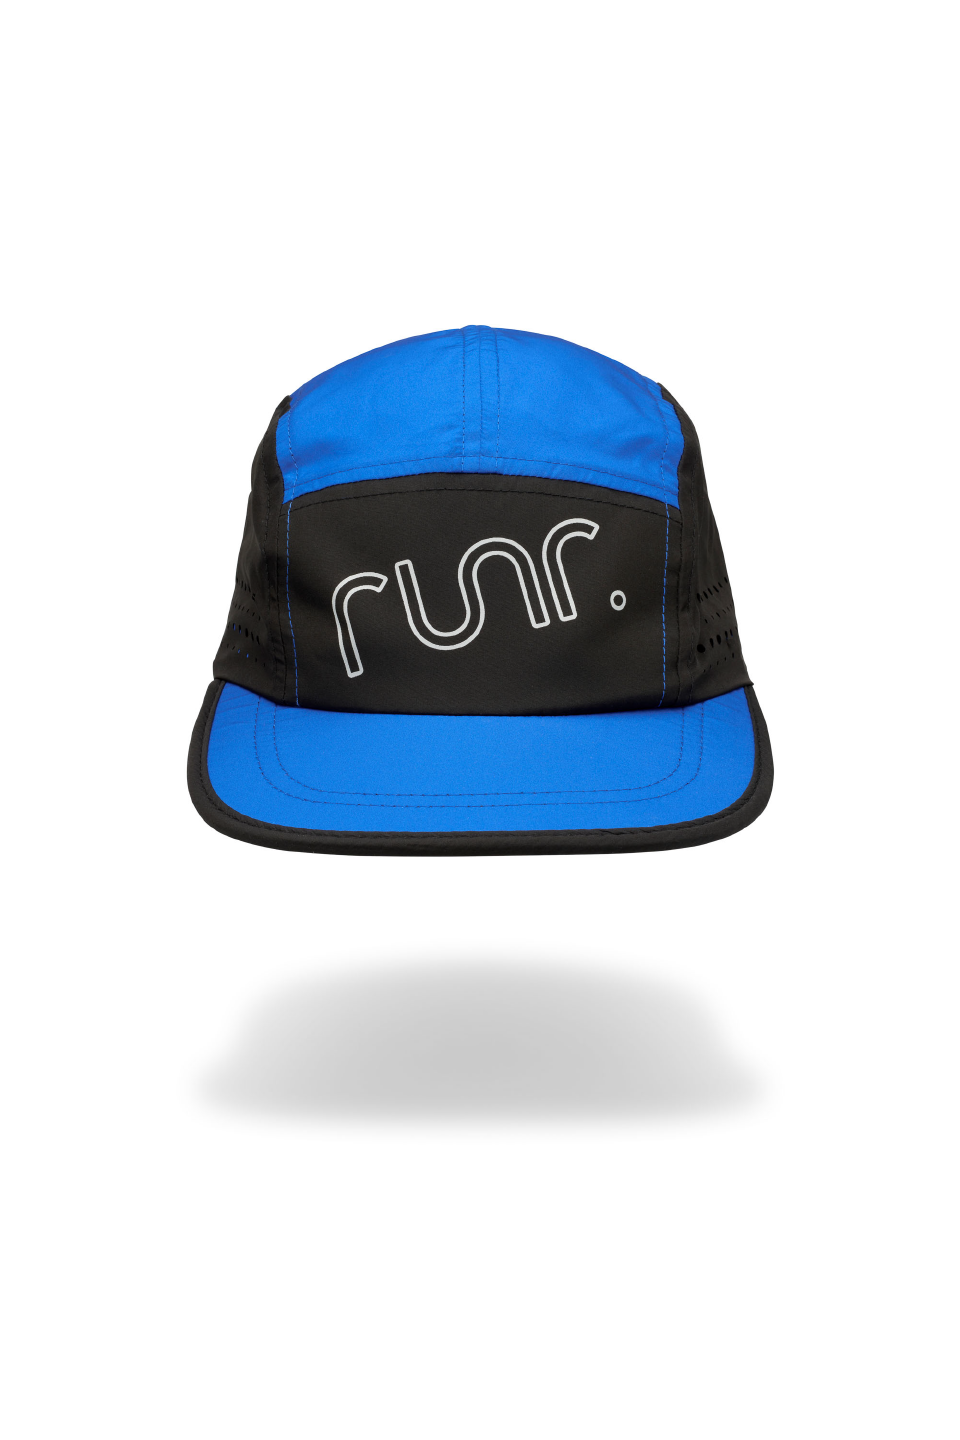 Runr Rio & Helsinki Running Hat Bundle